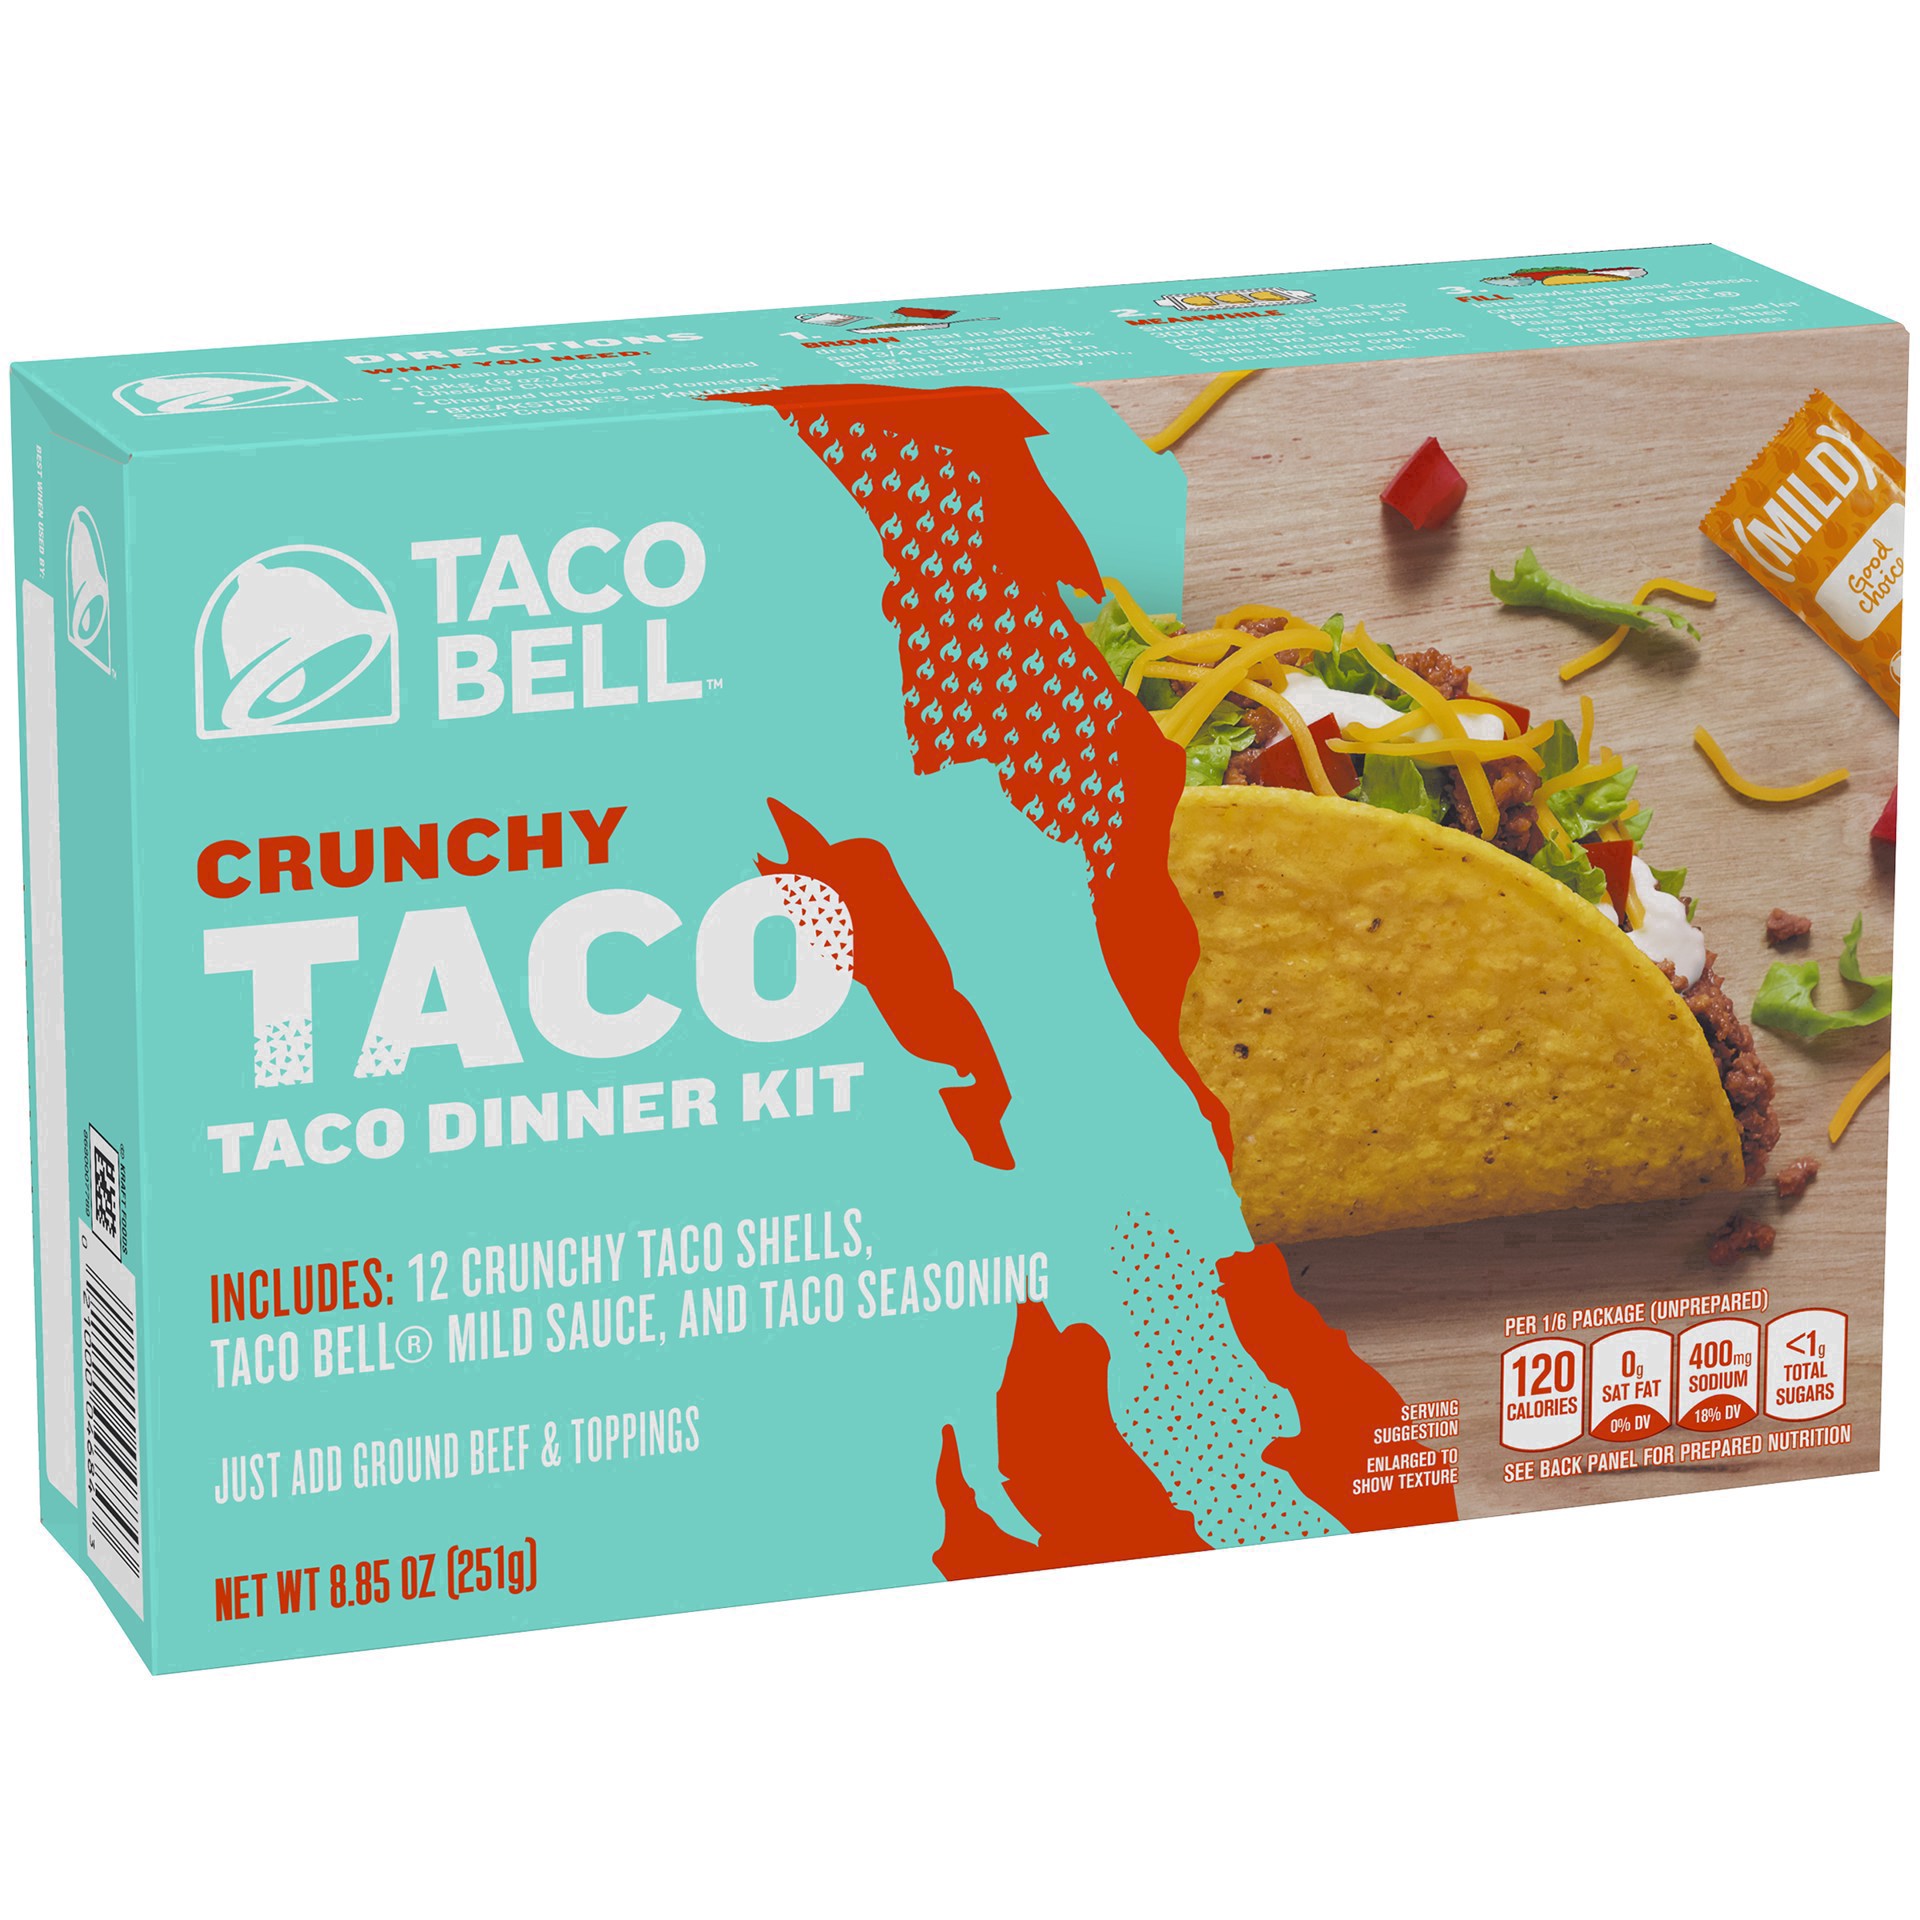 slide 24 of 91, Taco Bell Crunchy Taco Cravings Kit with 12 Crunchy Taco Shells, Taco Bell Mild Sauce & Seasoning, 8.85 oz Box, 1 ct